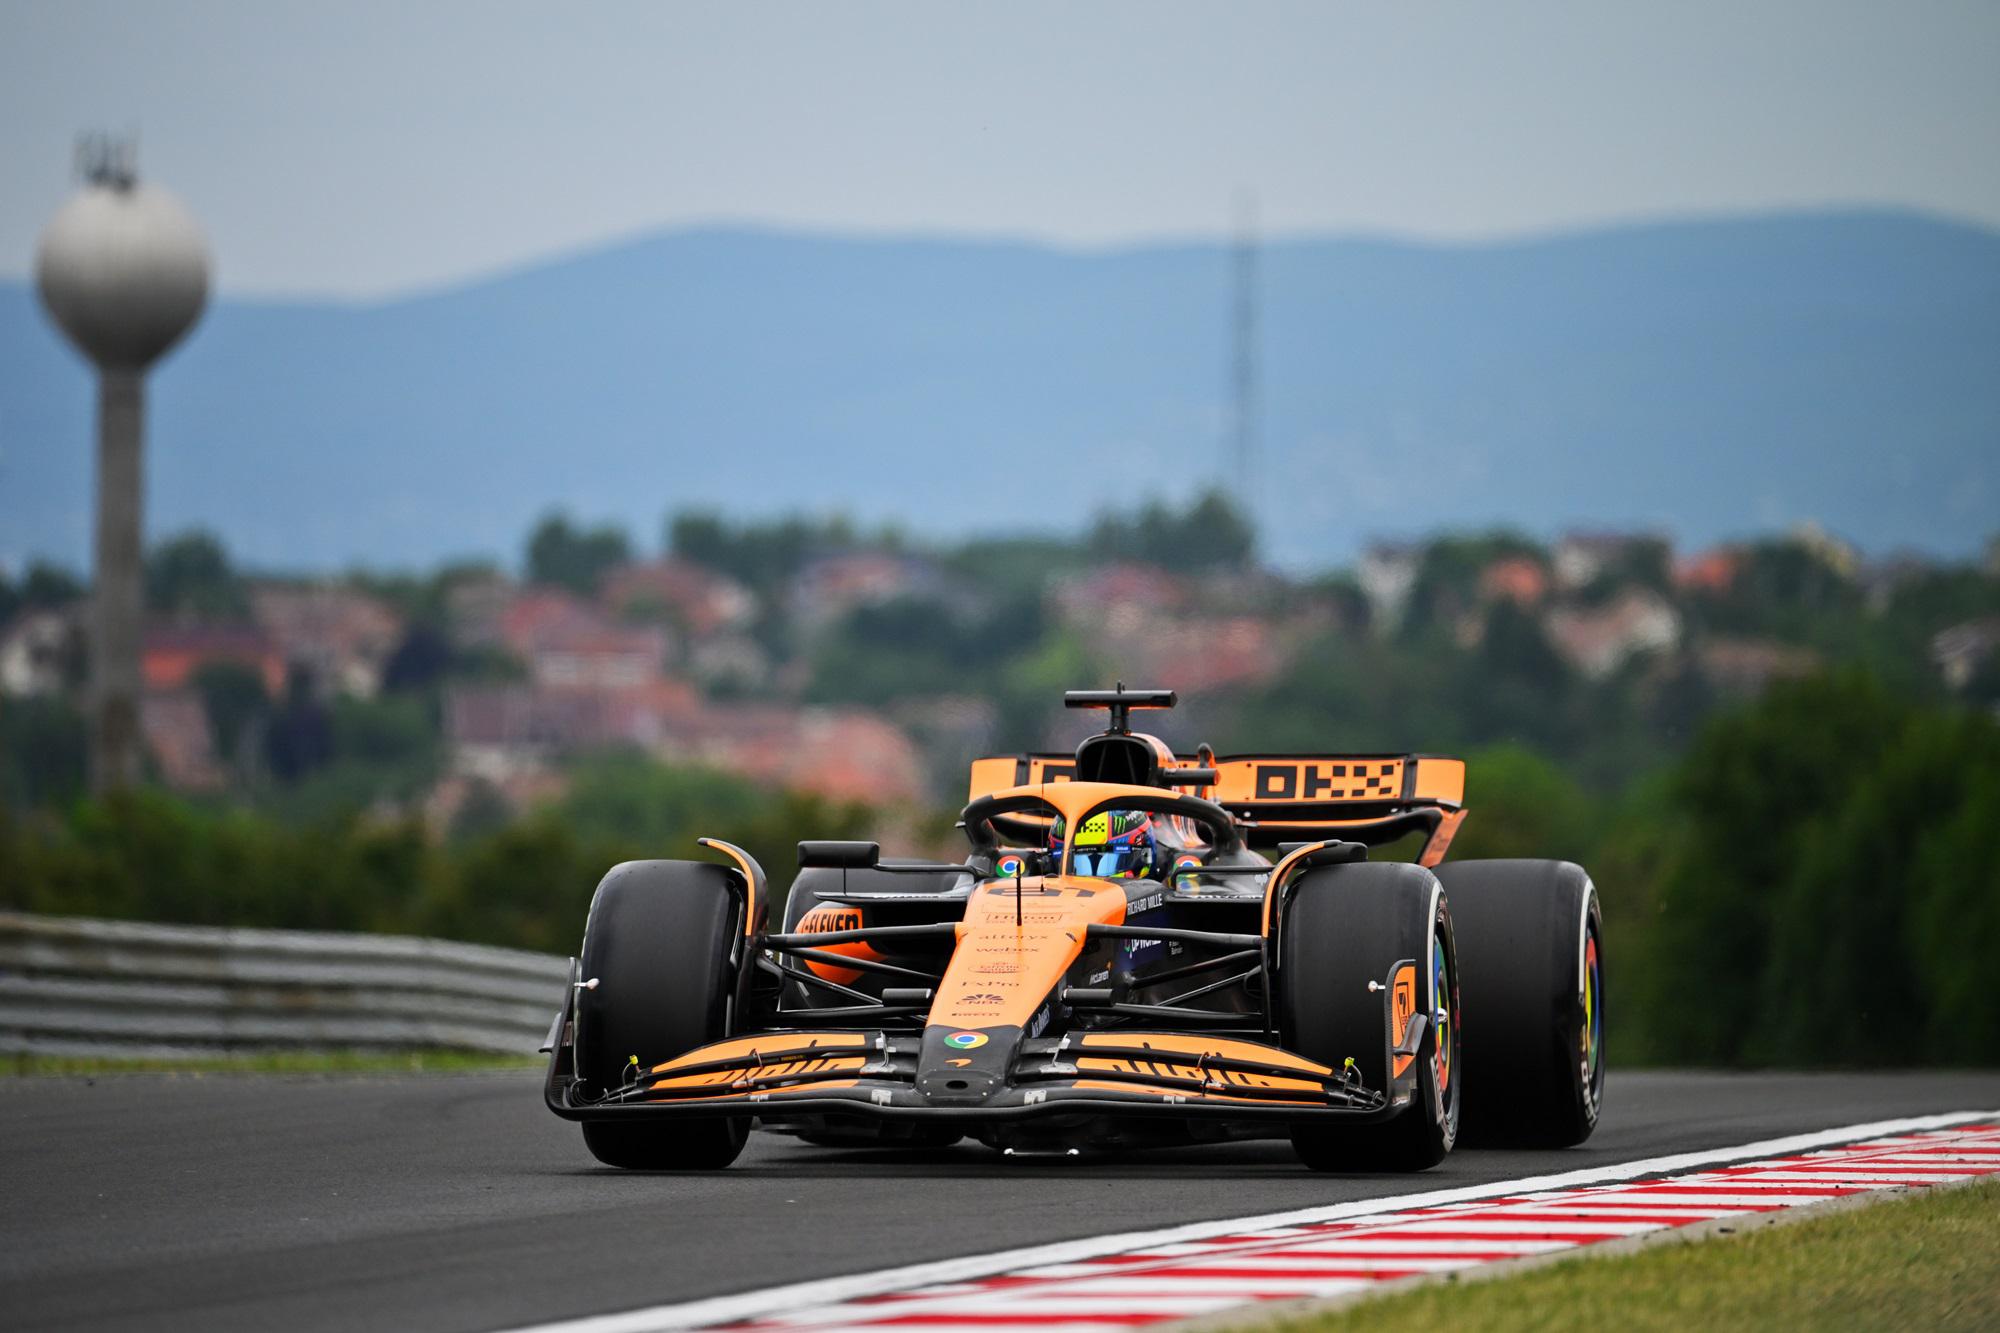 Gp Ungheria - doppietta McLaren: Piastri vince davanti a Norris e Ferrari giù dal podio